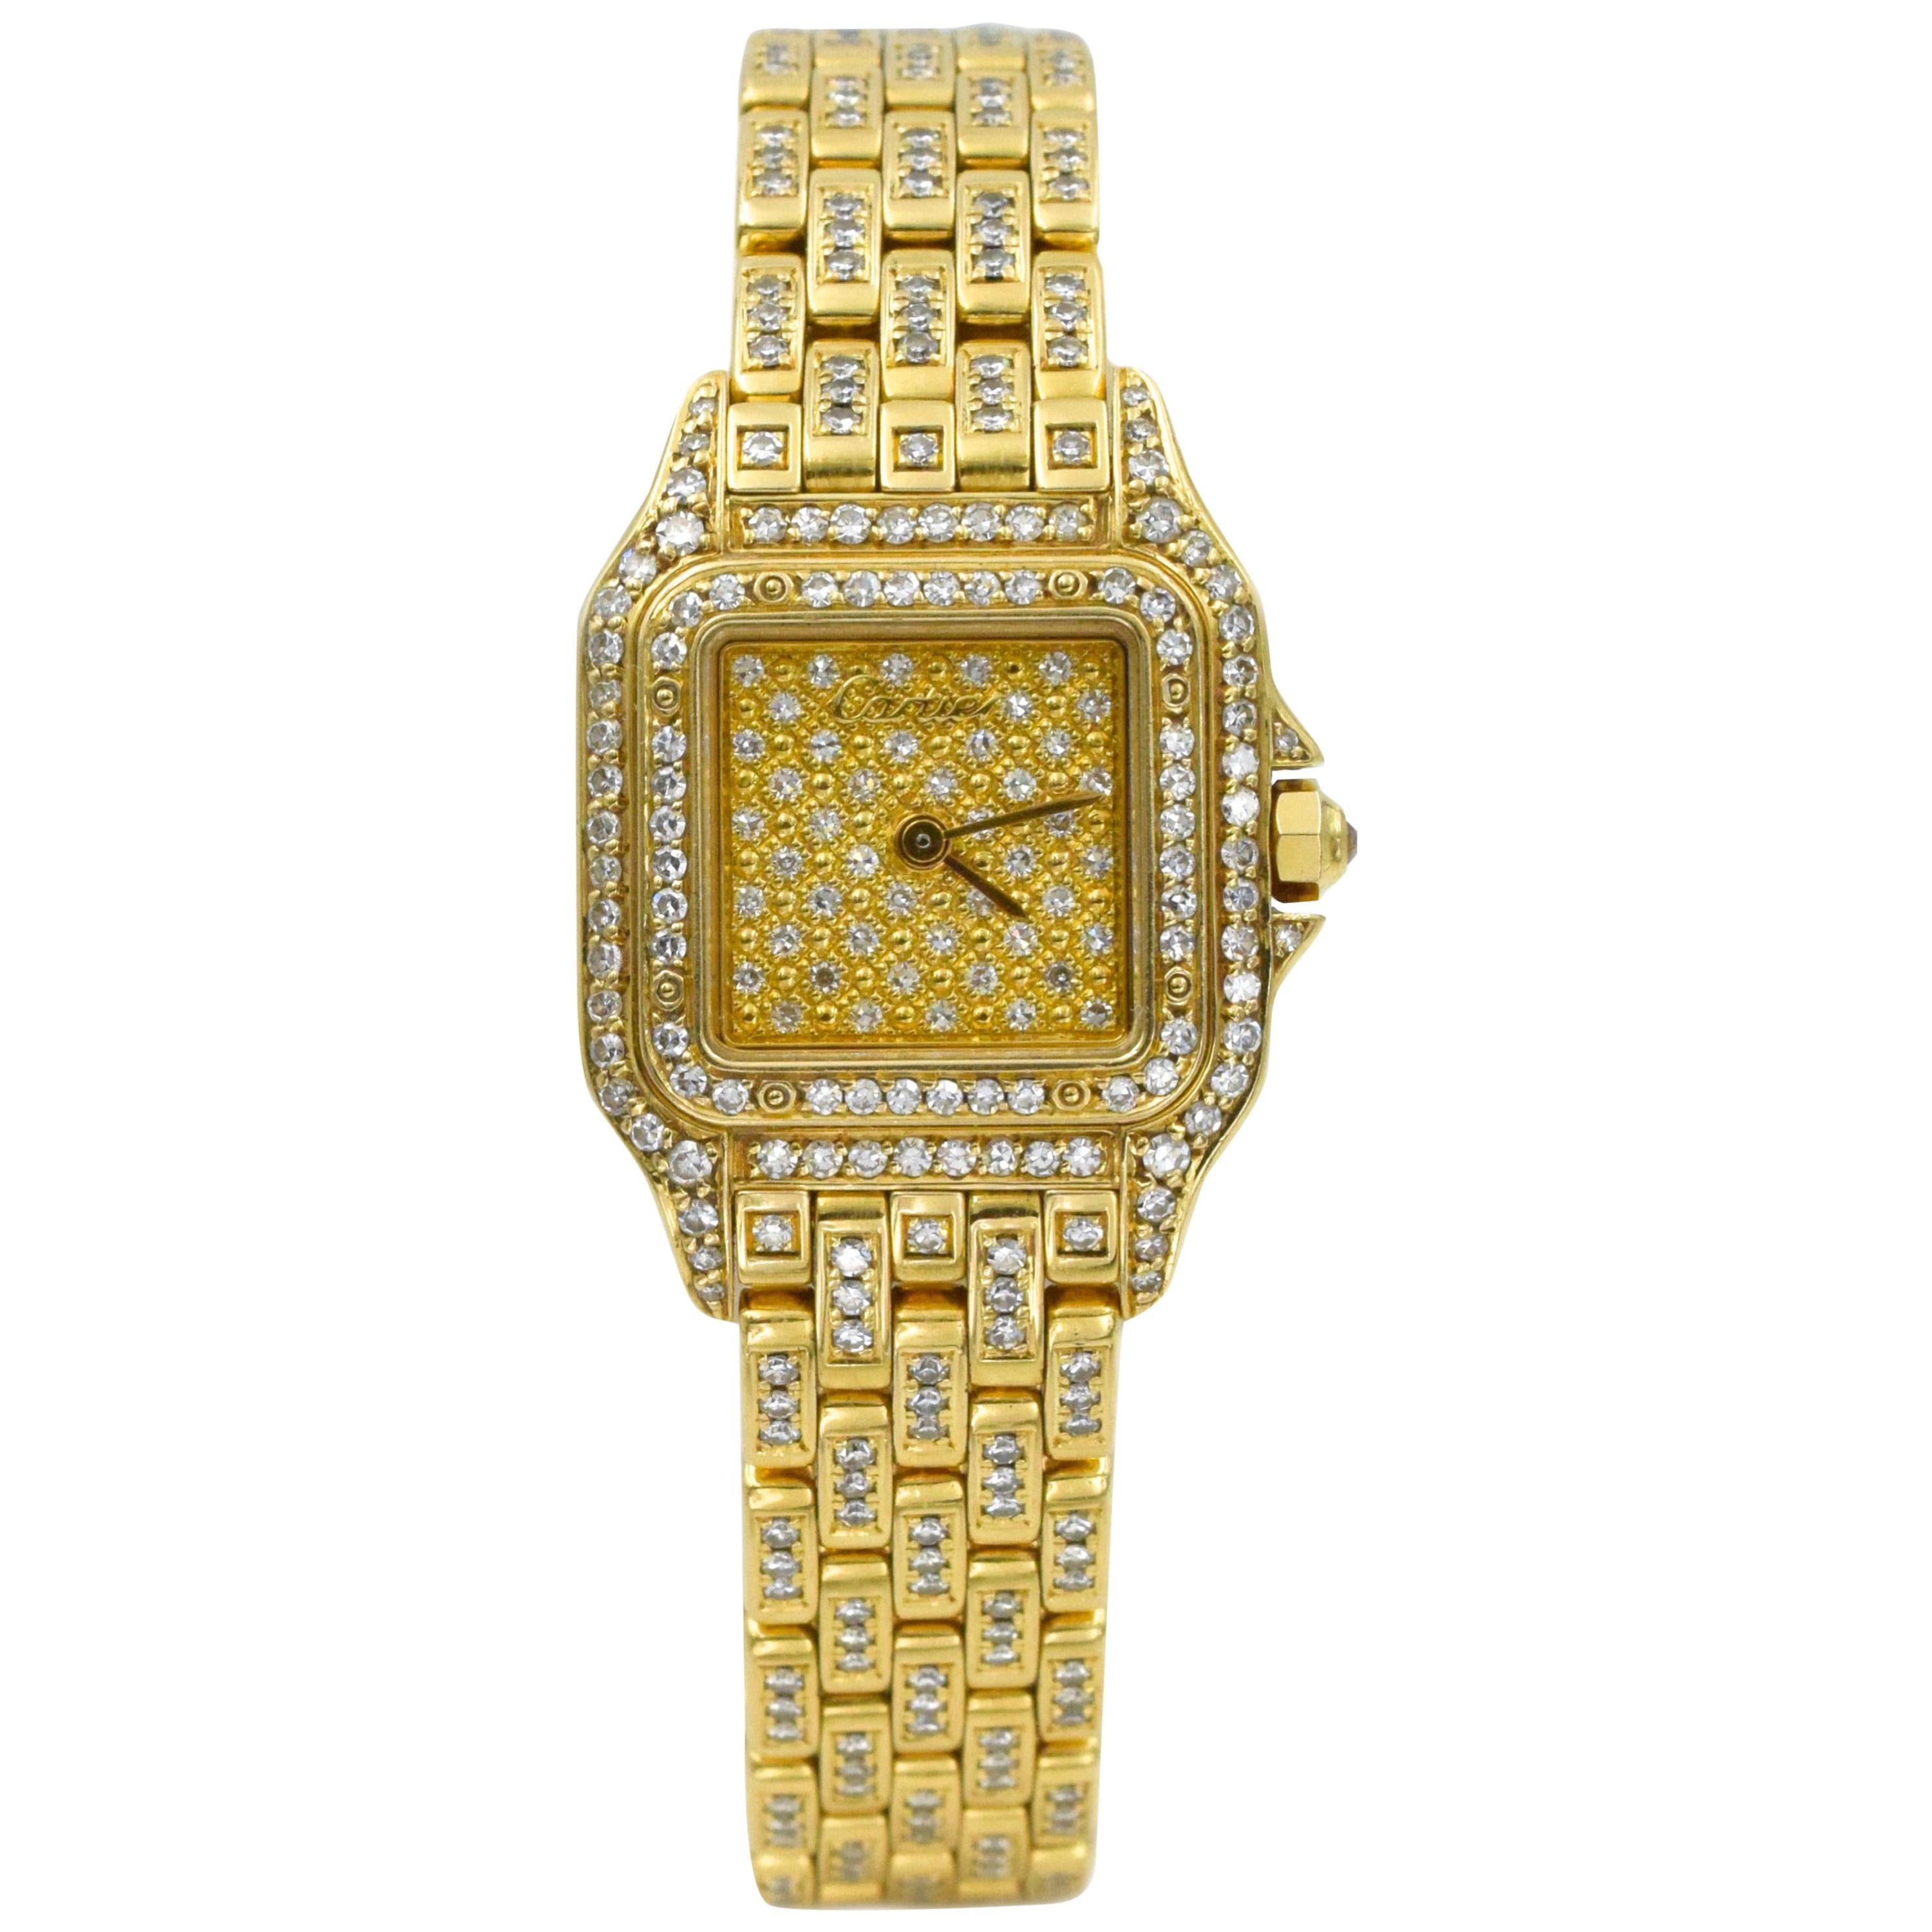 Cartier "Panthère de Cartier" Diamond Watch